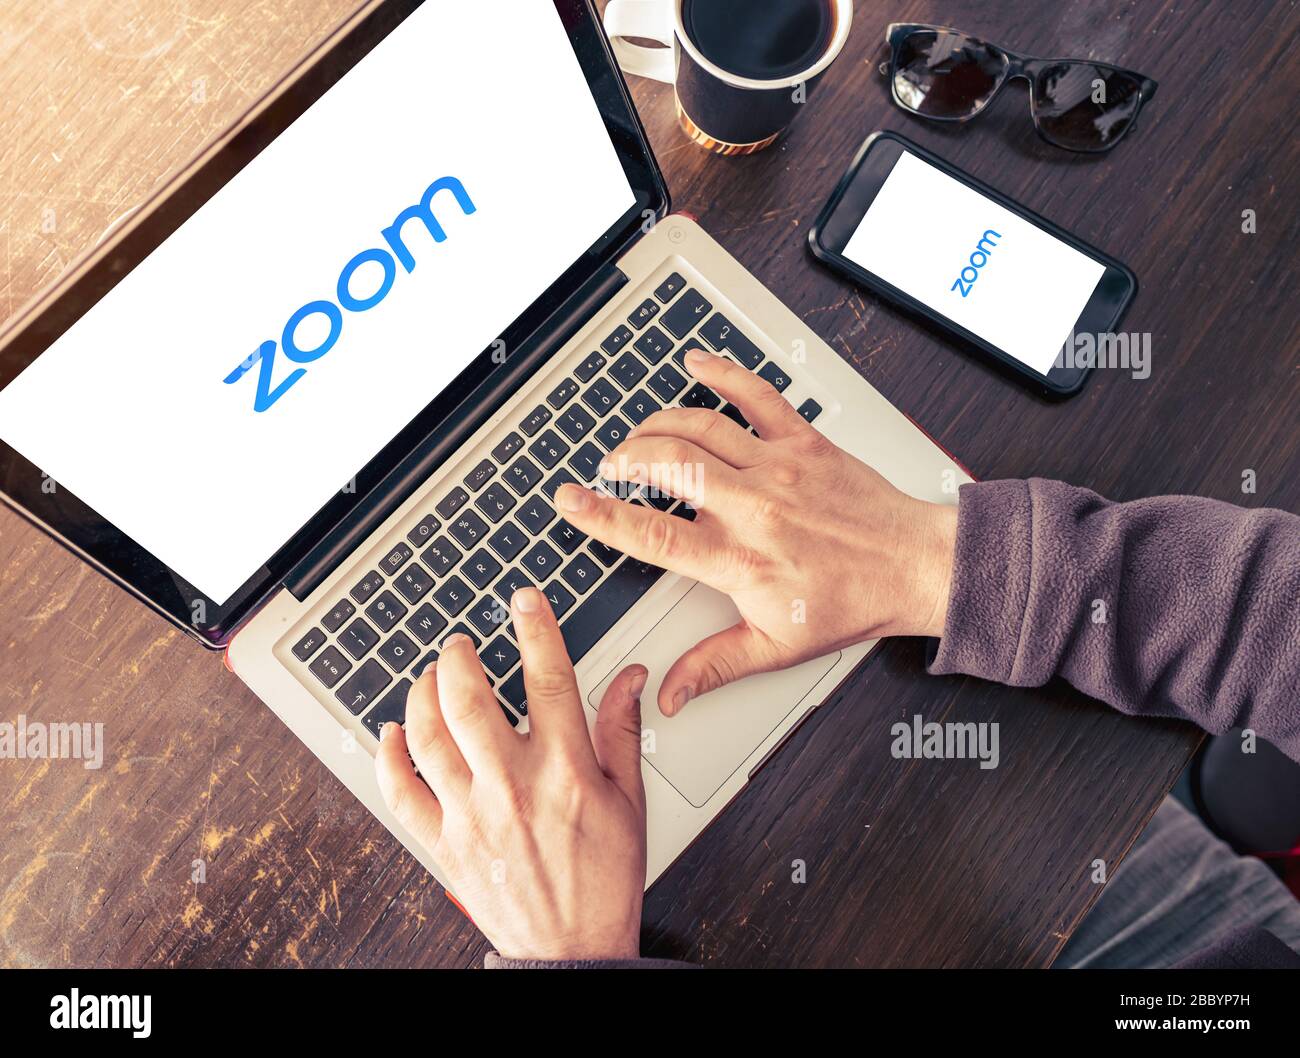 Laptop und Mobiltelefon mit dem Logo der App "Zoom Cloud Meetings". Antalya, TÜRKEI - 30. März 2020. Stockfoto